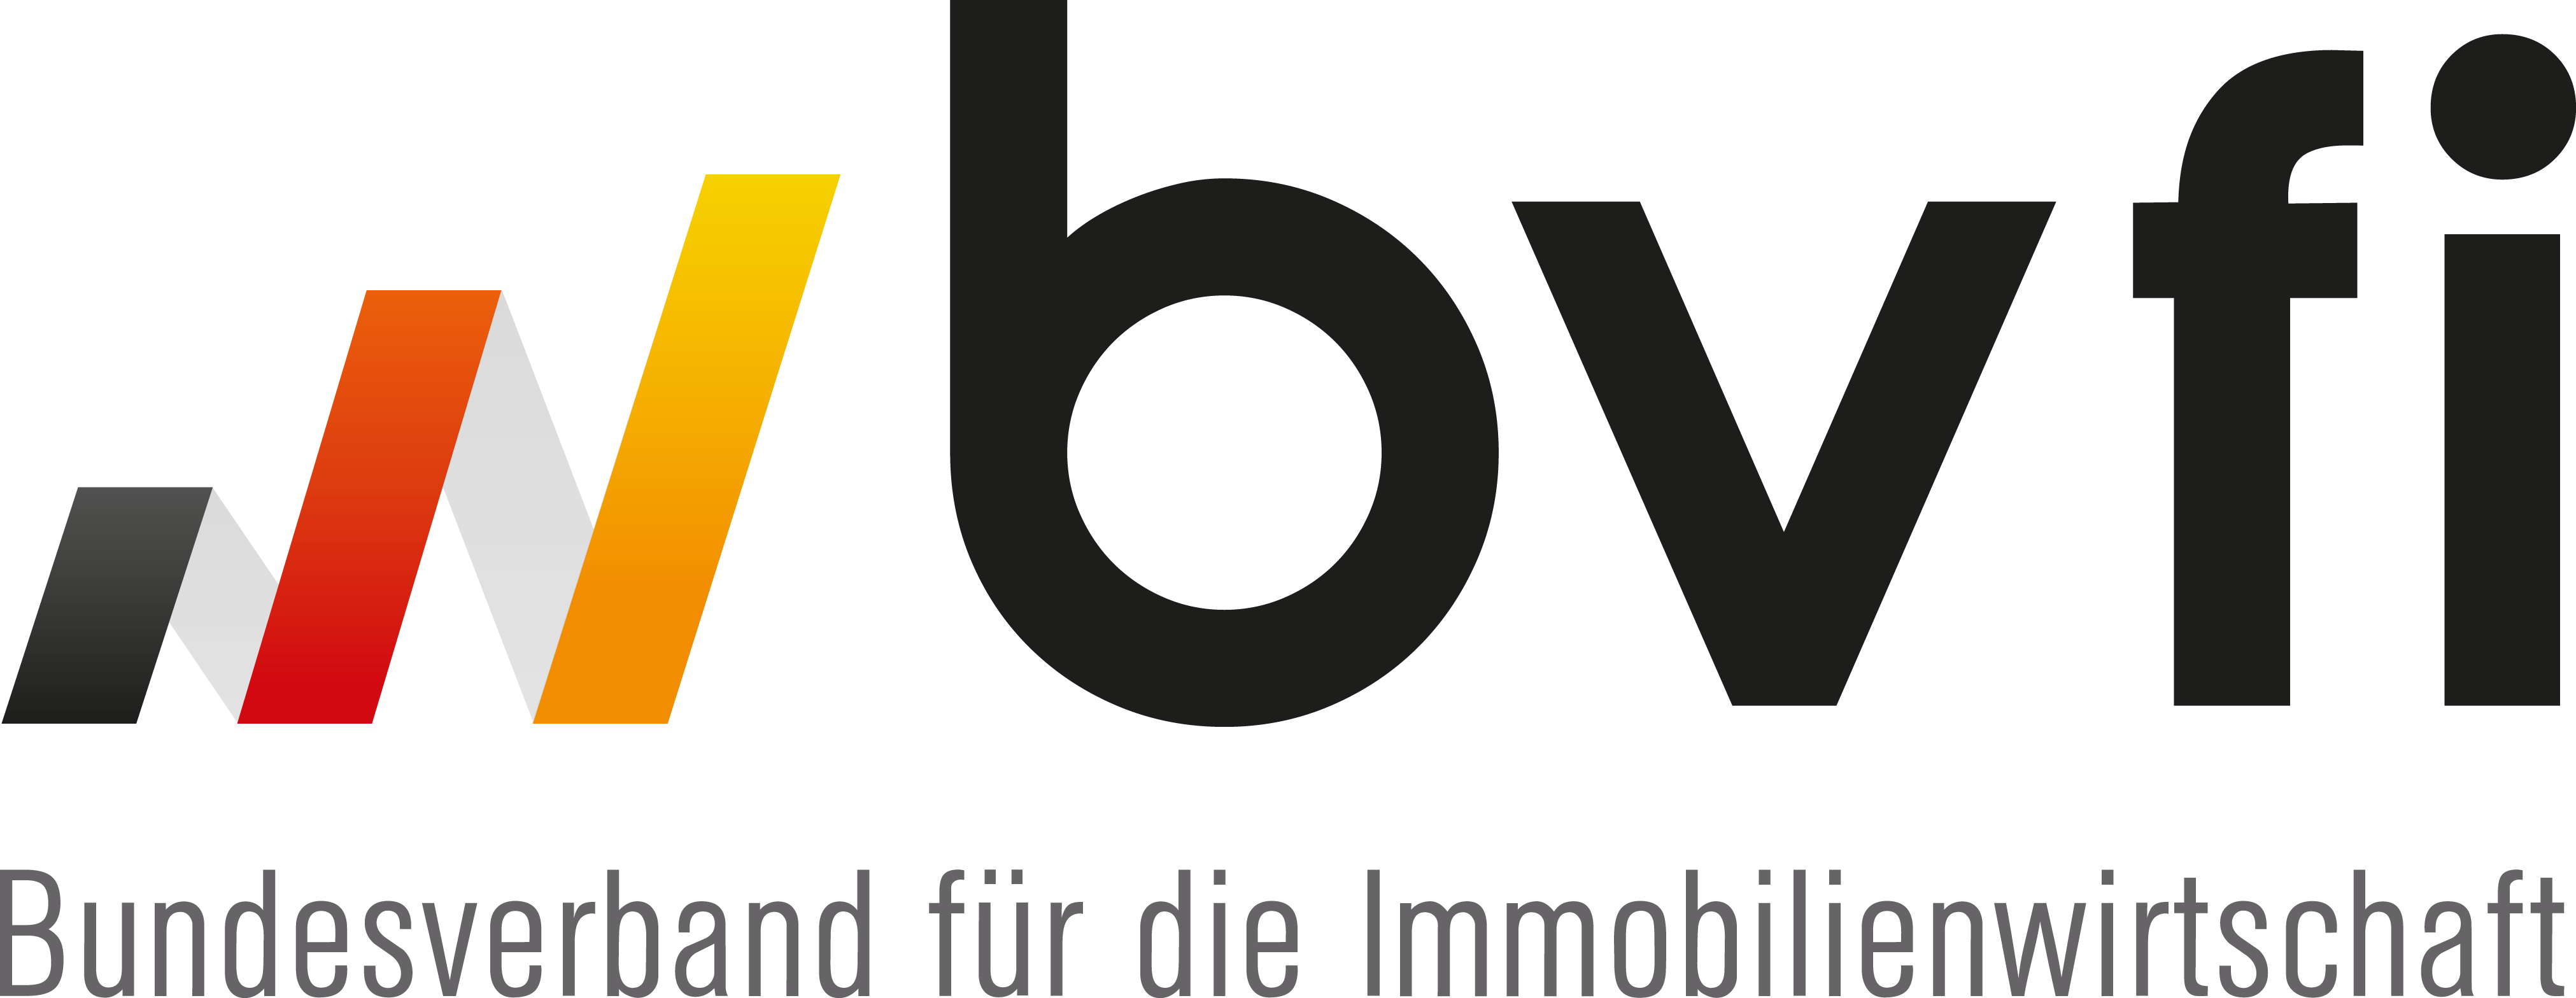 BVFI Logo